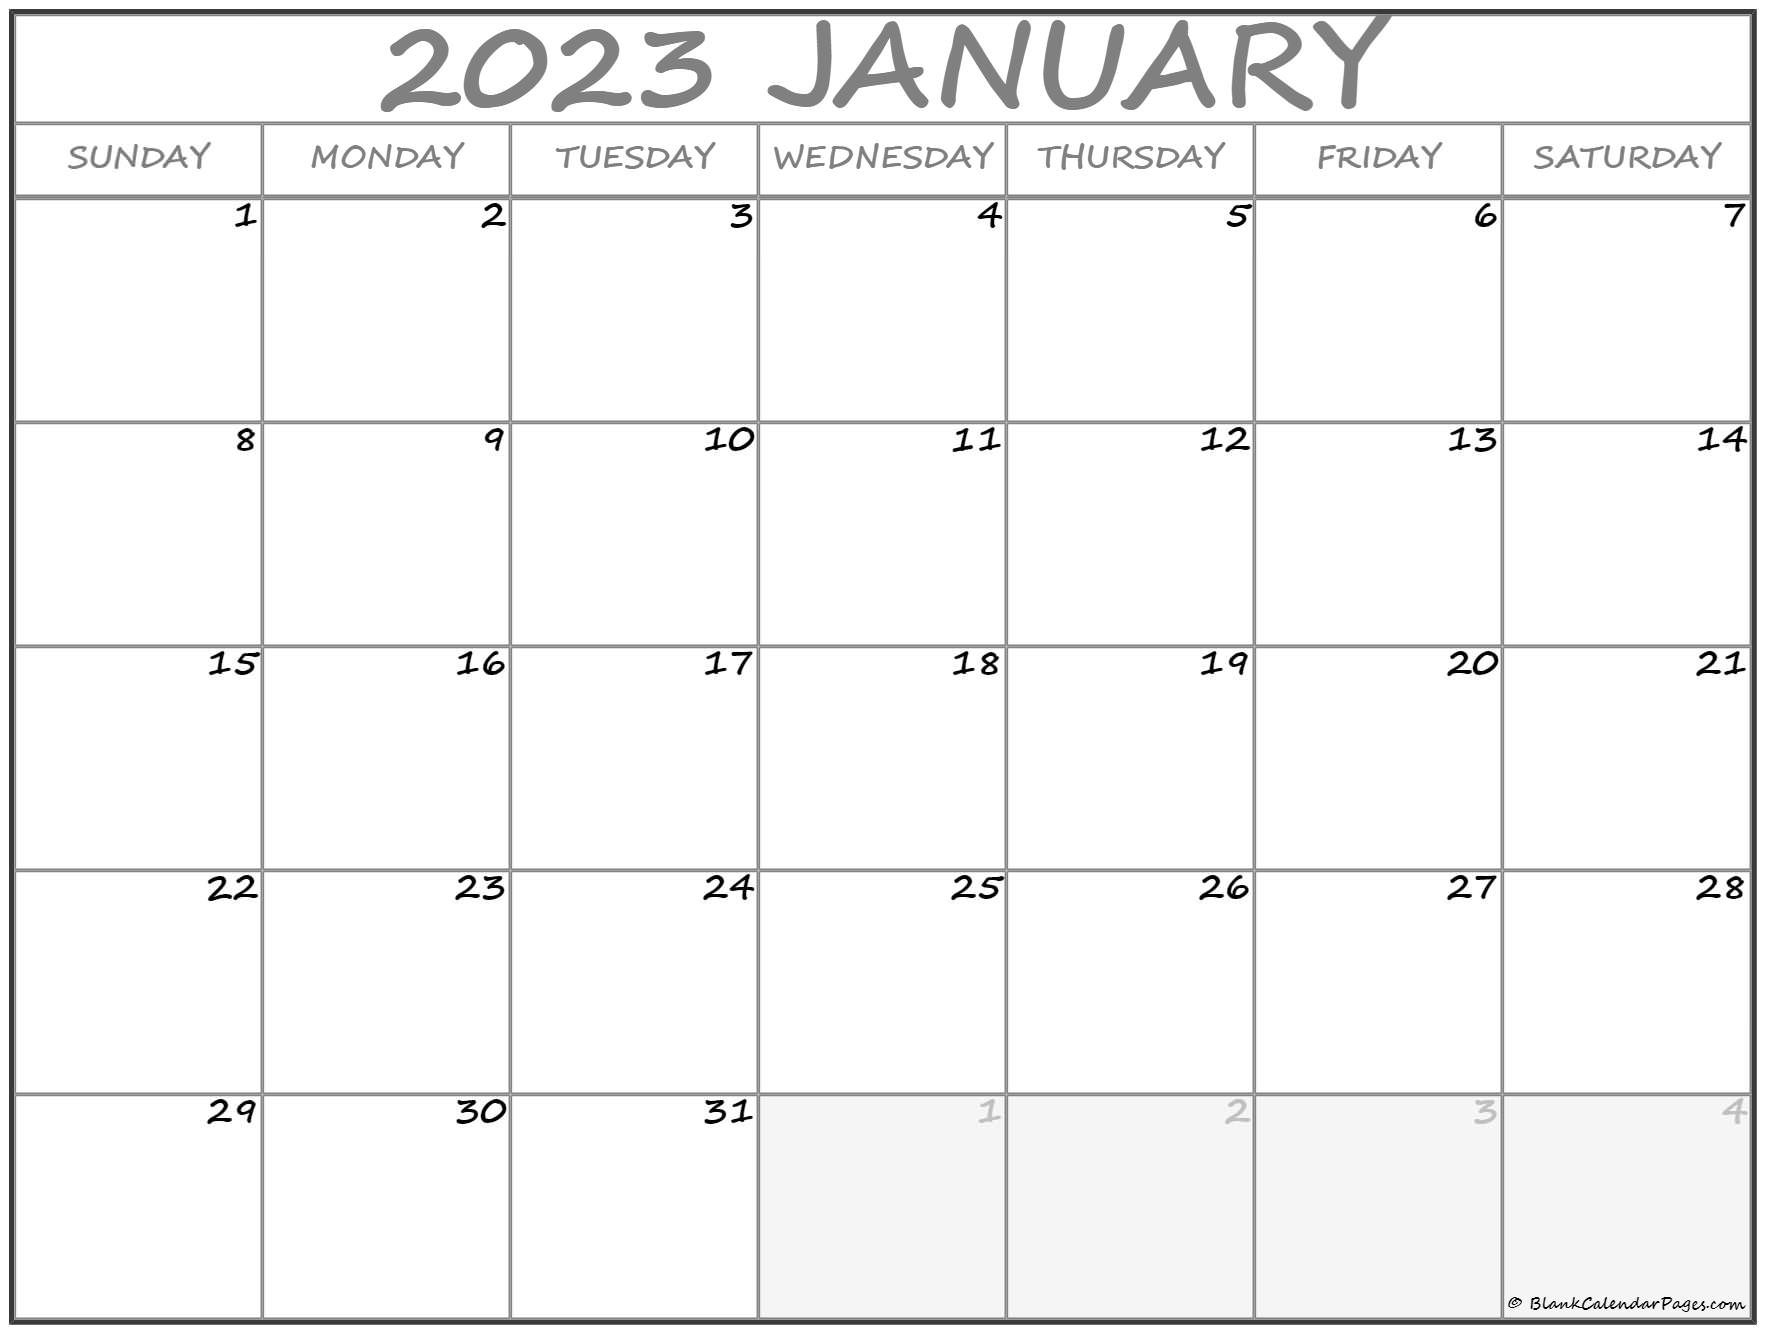 grab-calendar-january-2023-januarycalendar